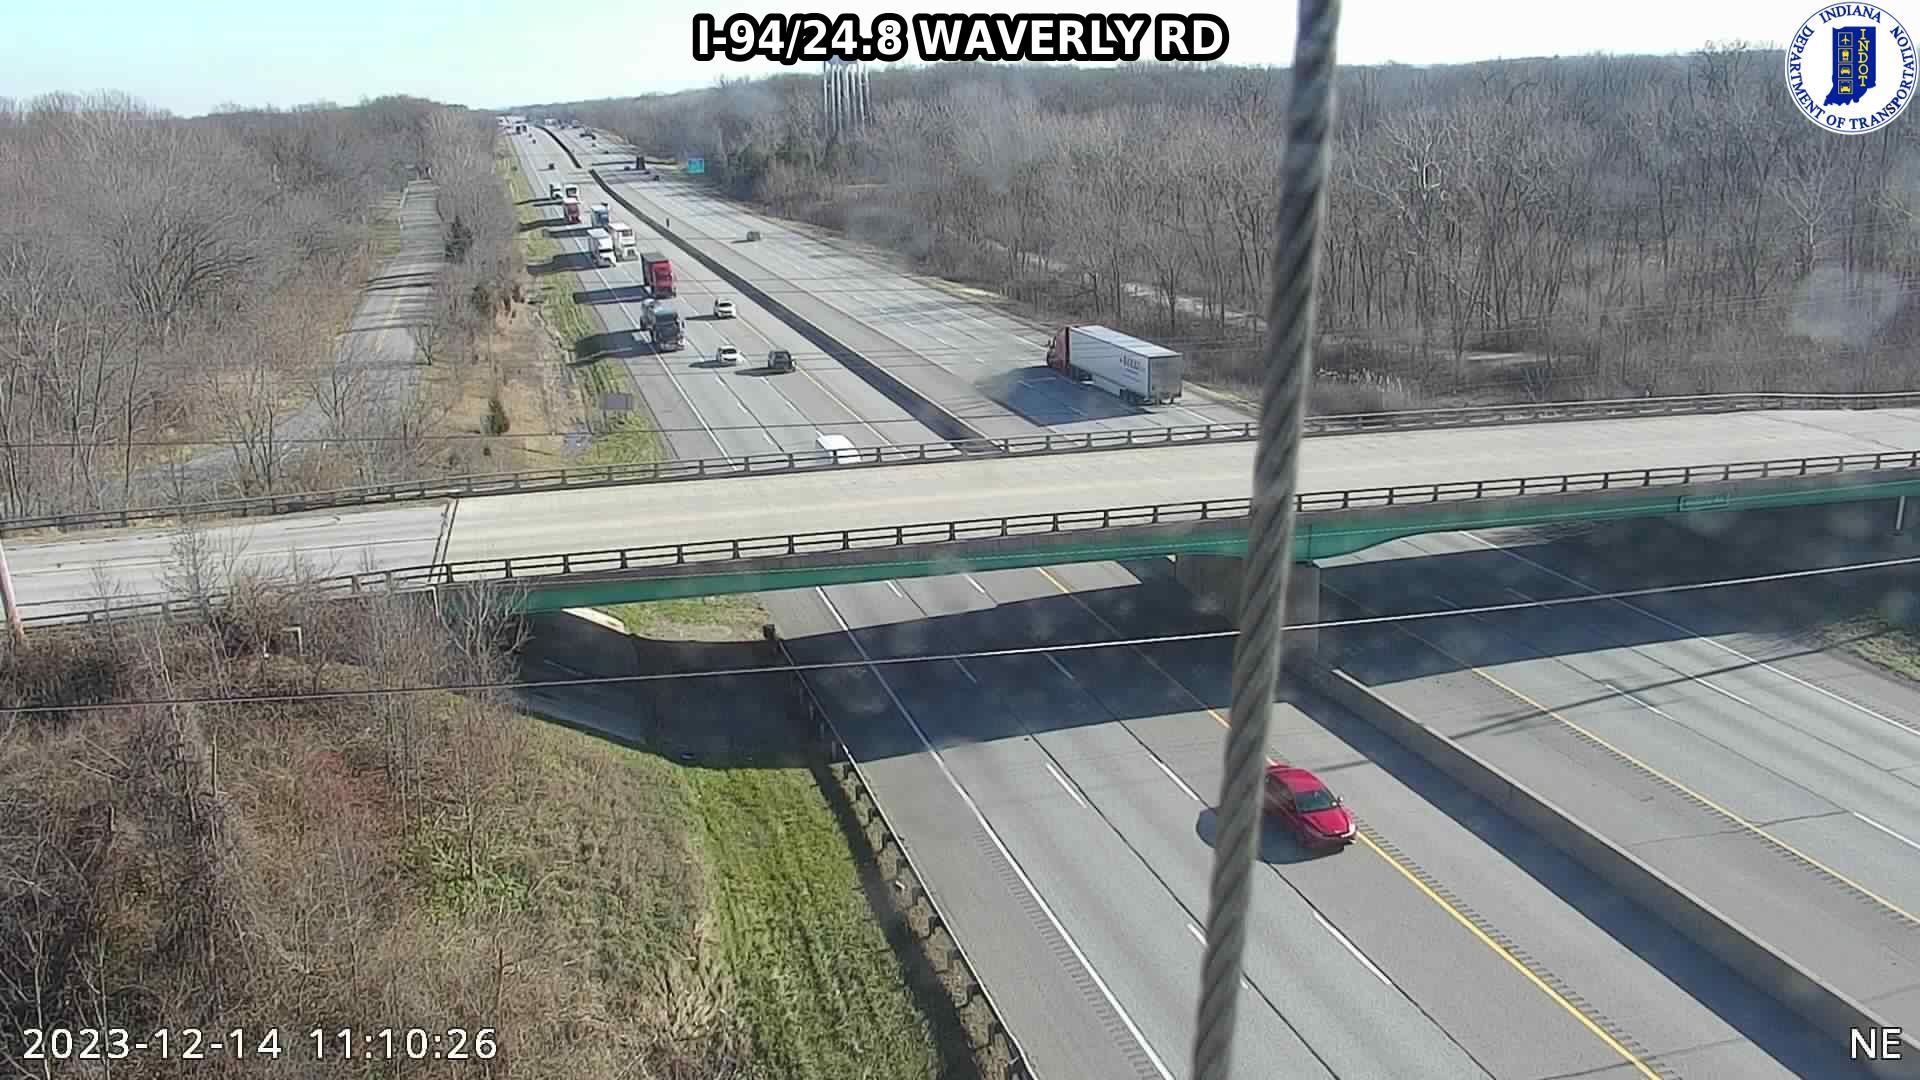 Porter: I-94: I-94/24.8 WAVERLY RD : I-94/24.8 WAVERLY RD Traffic Camera